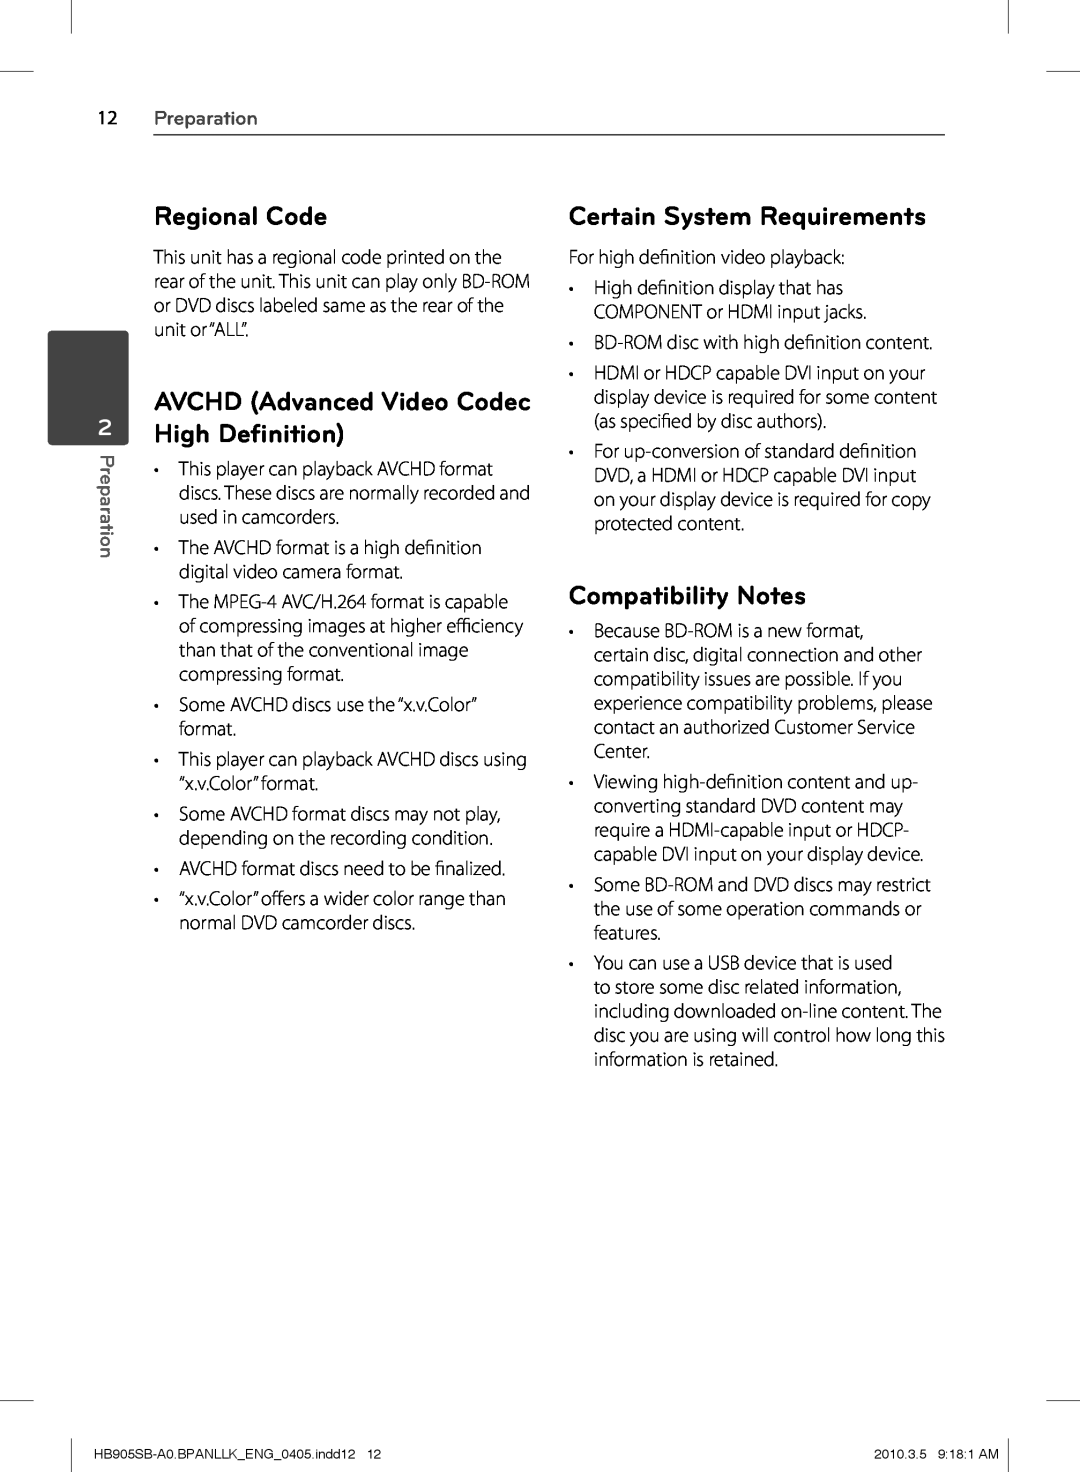 LG Electronics HB905SB Regional Code, High Deﬁnition, Compatibility Notes, AVCHD Advanced Video Codec, 12Preparation 